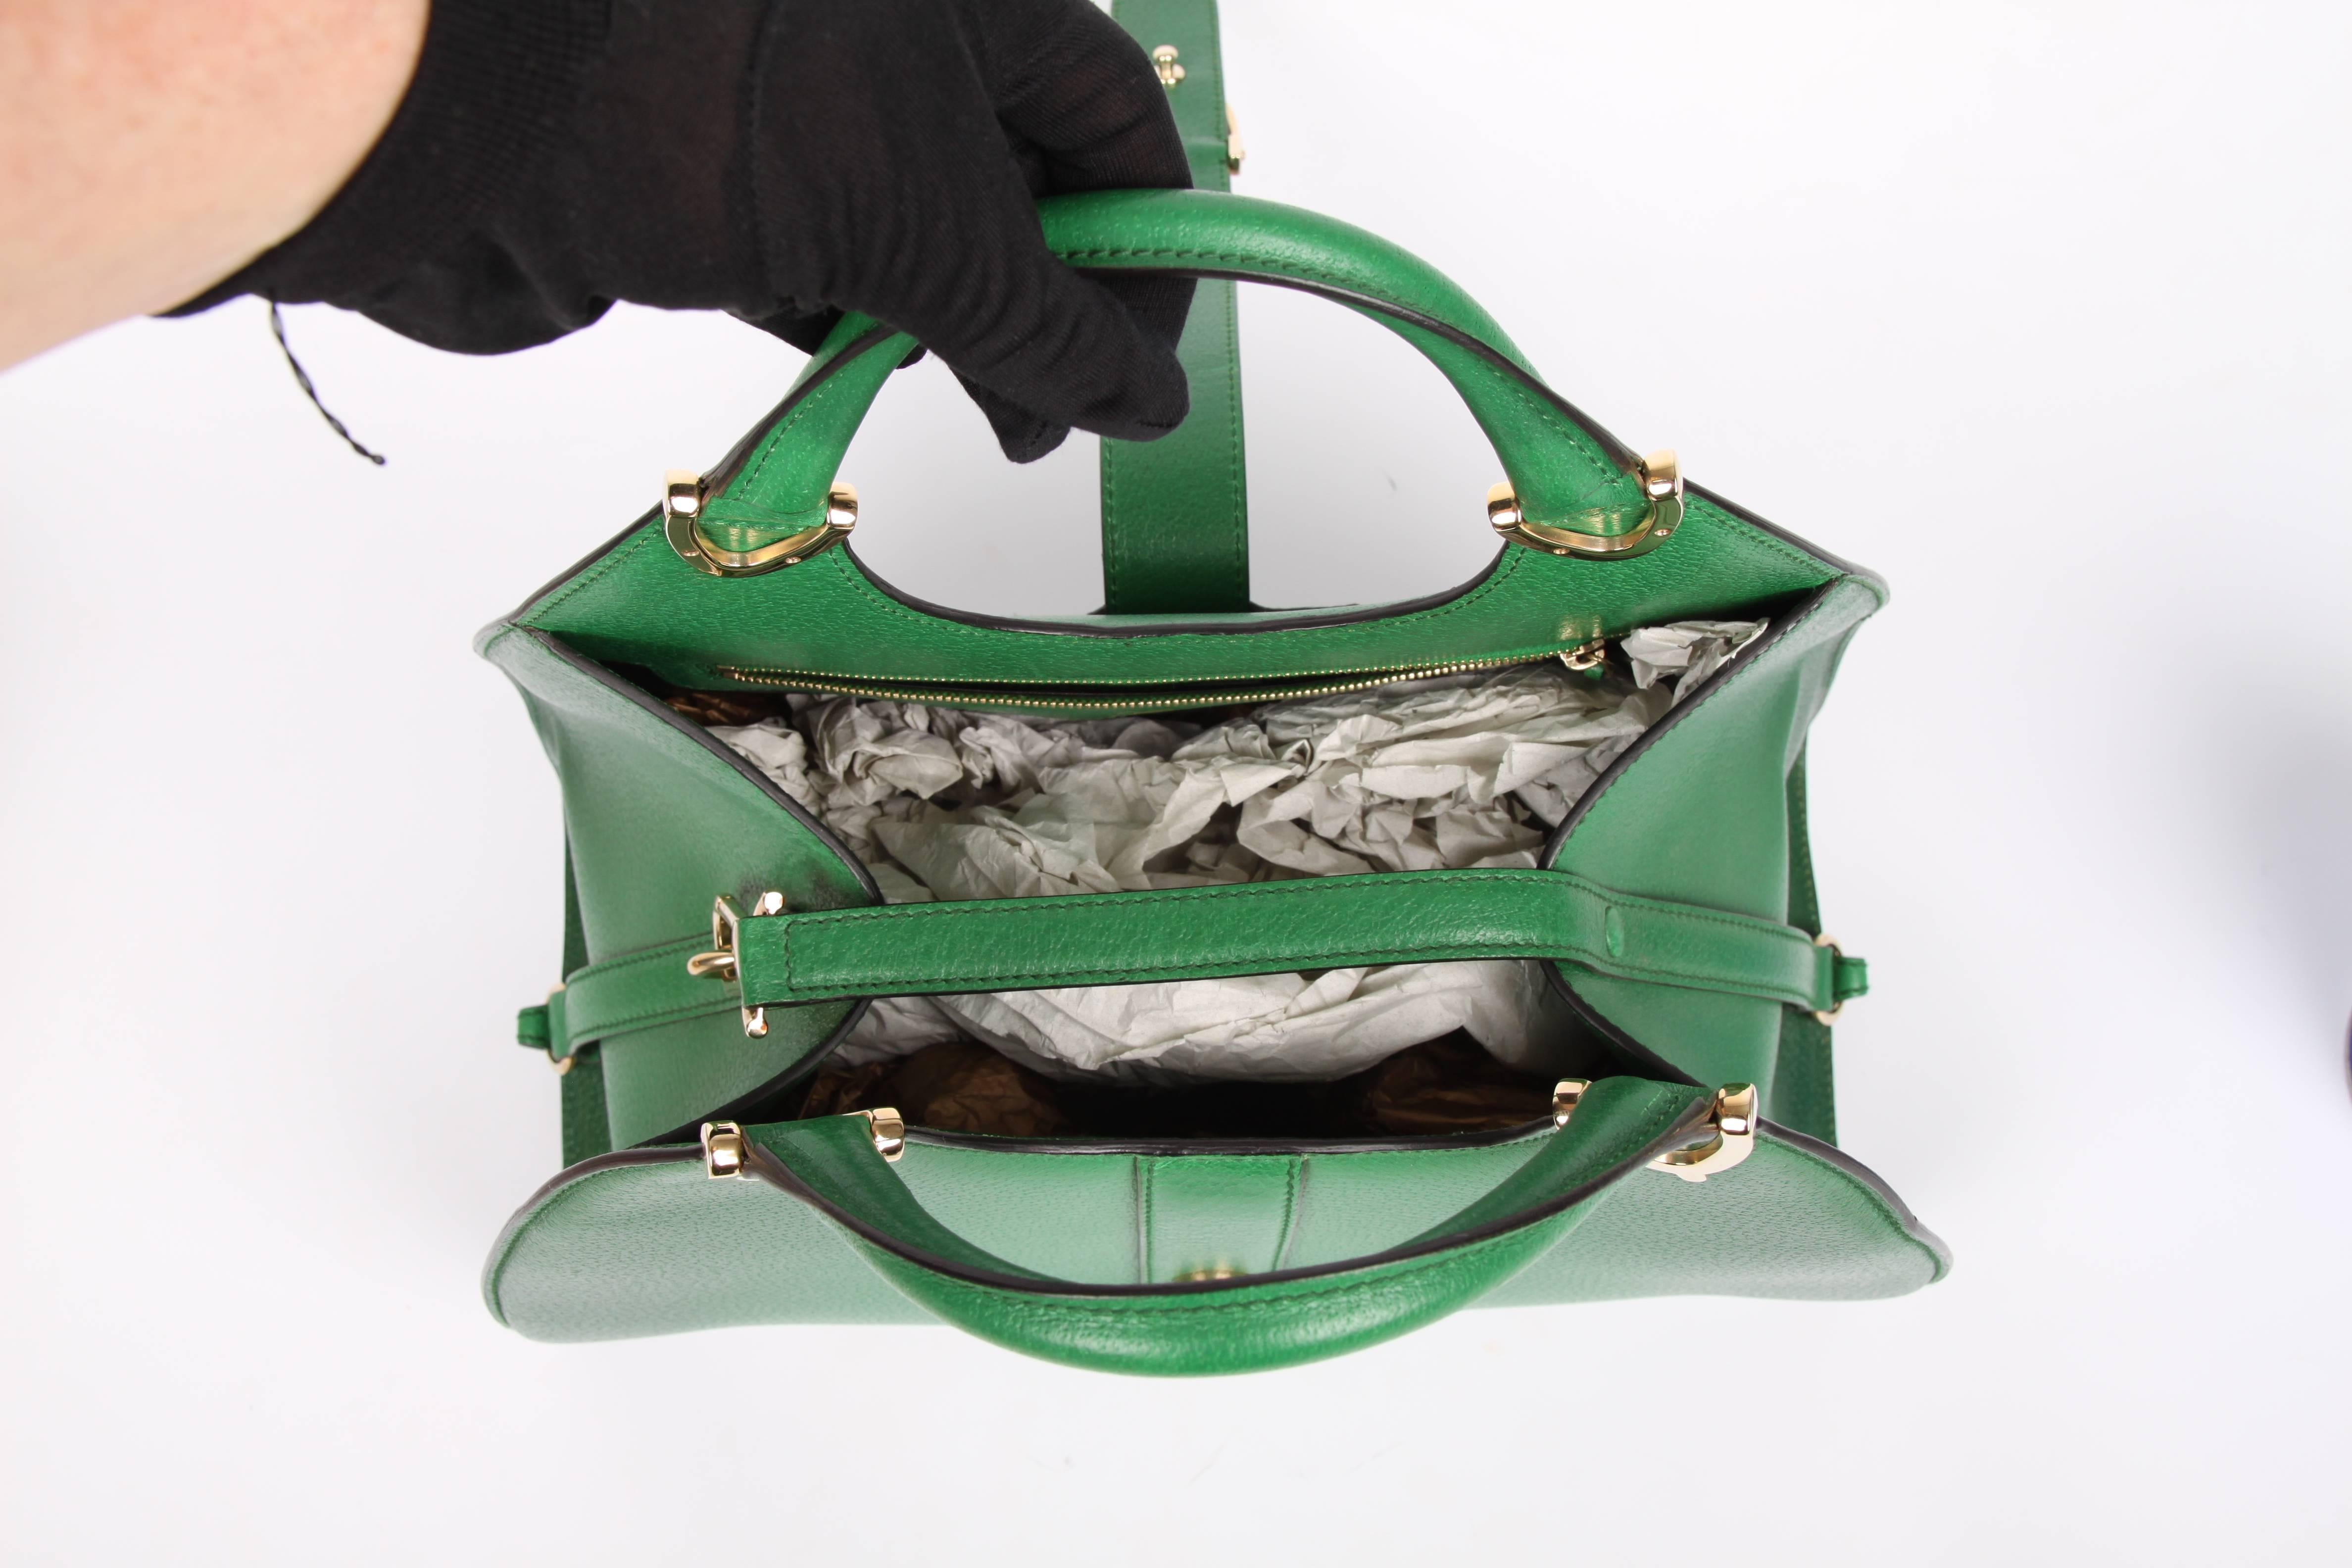   Gucci Stirrup Top Handle Bag - green   Gucci Stirrup Top Handle Bag - green    1